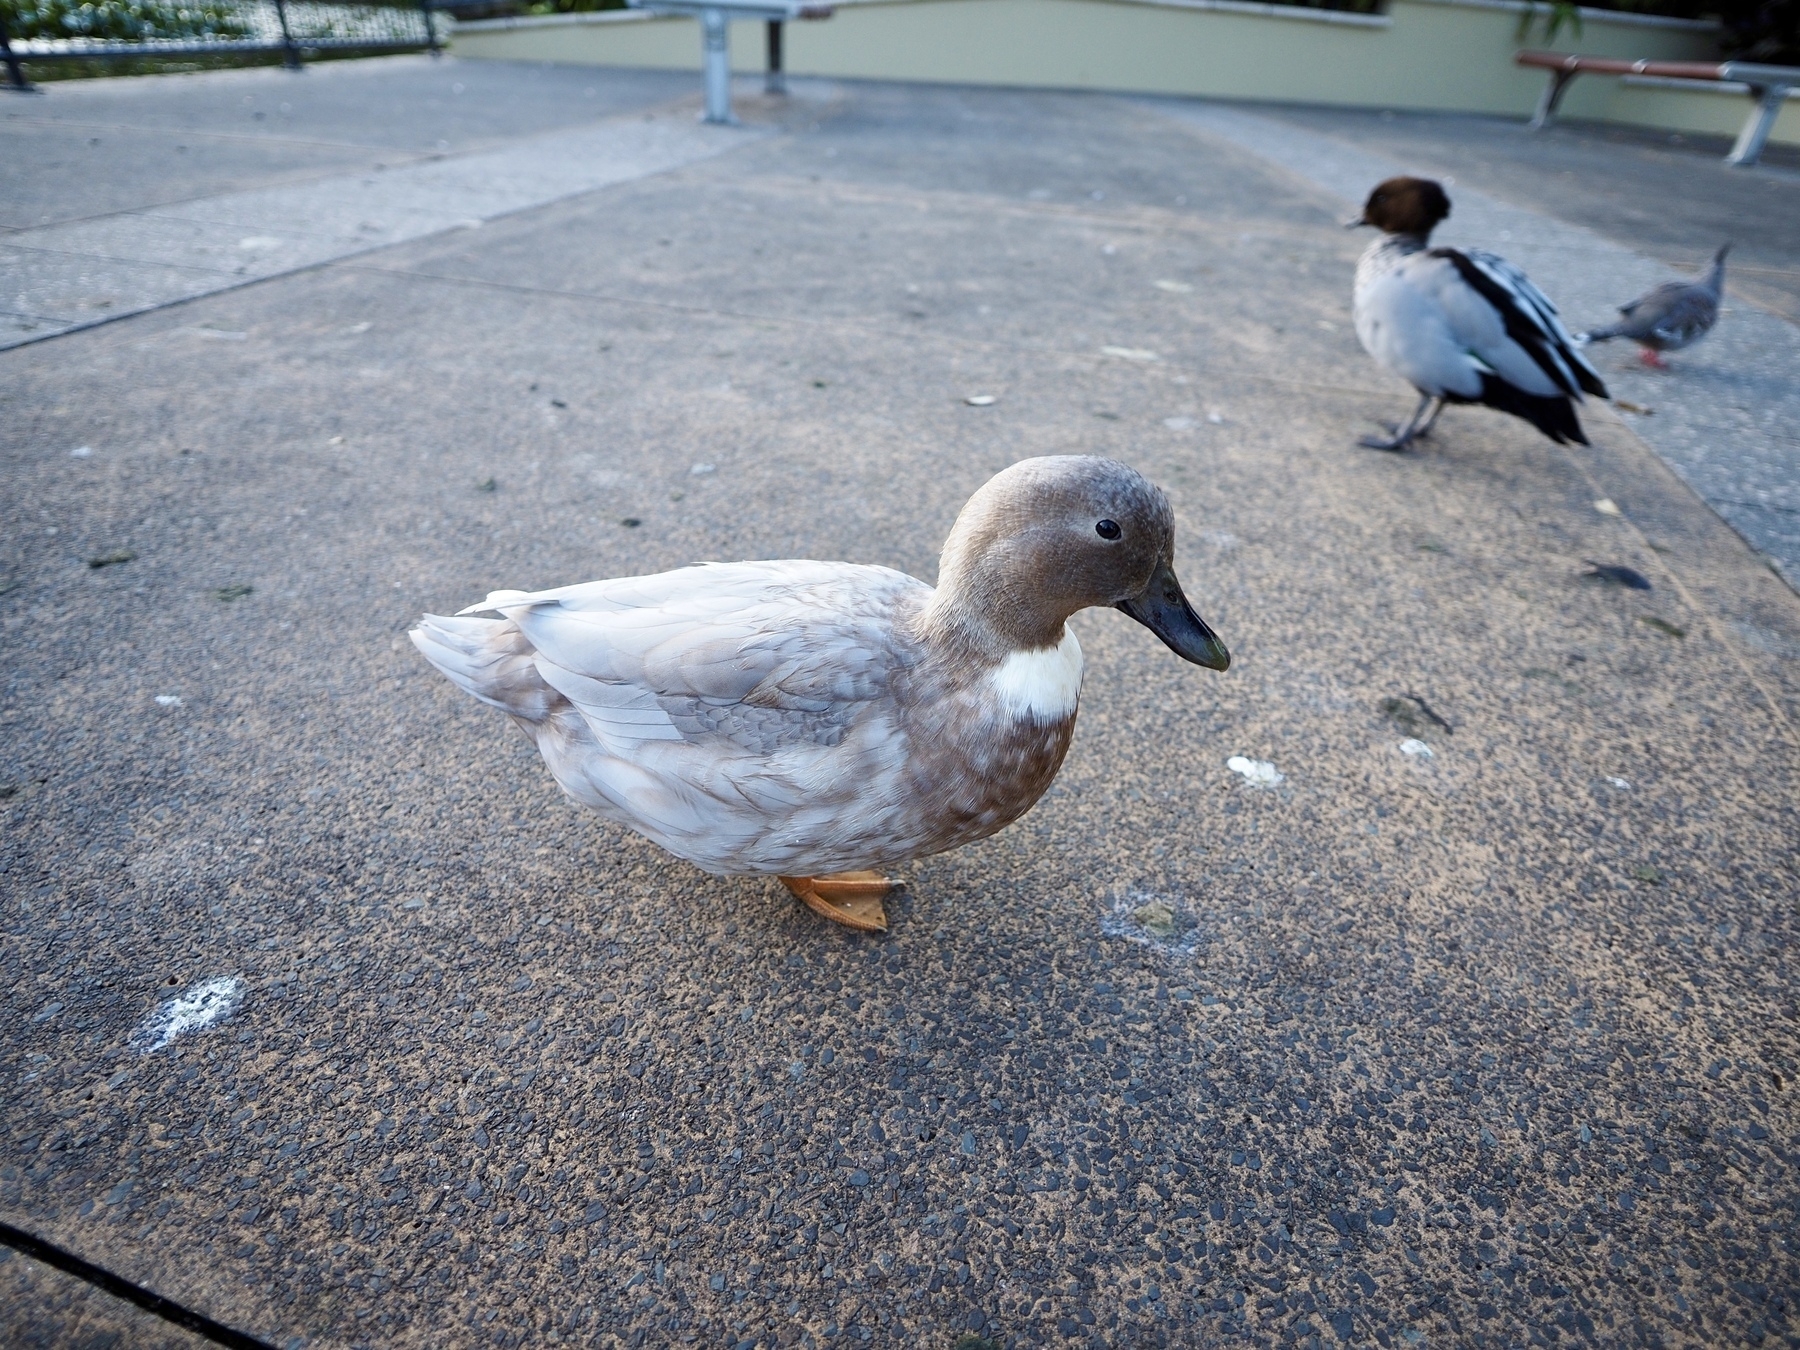 Ducks waddling on concrete